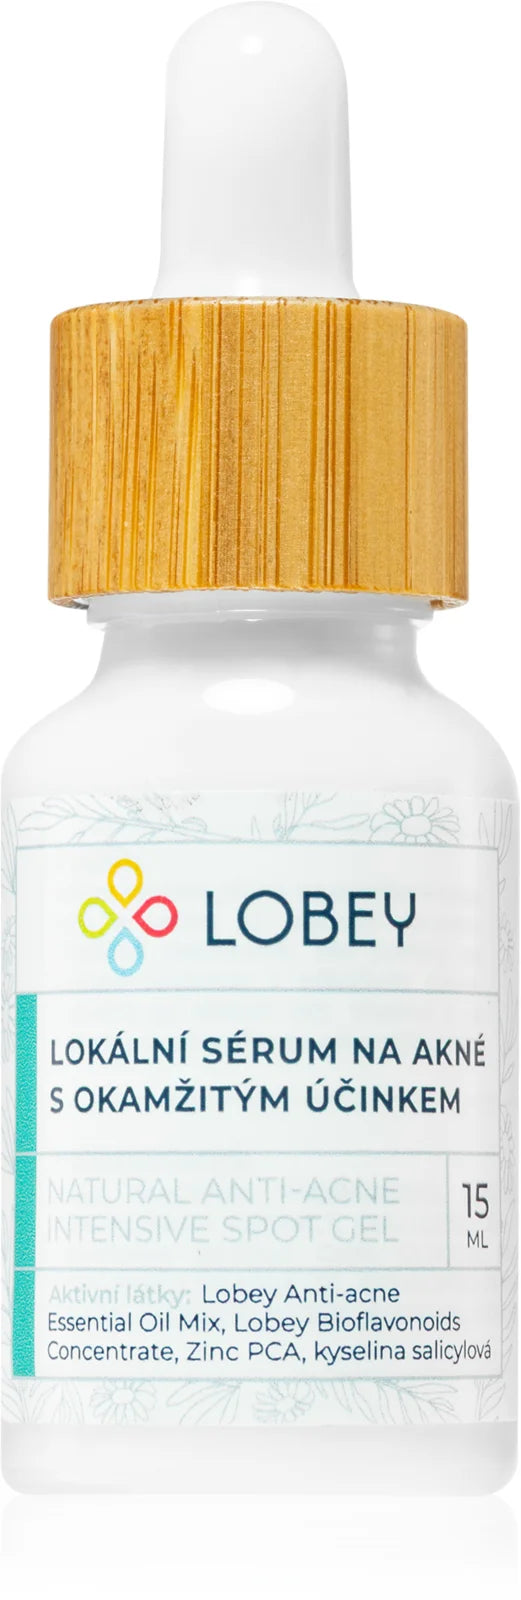 Lobey Local anti-acne care 15 ml